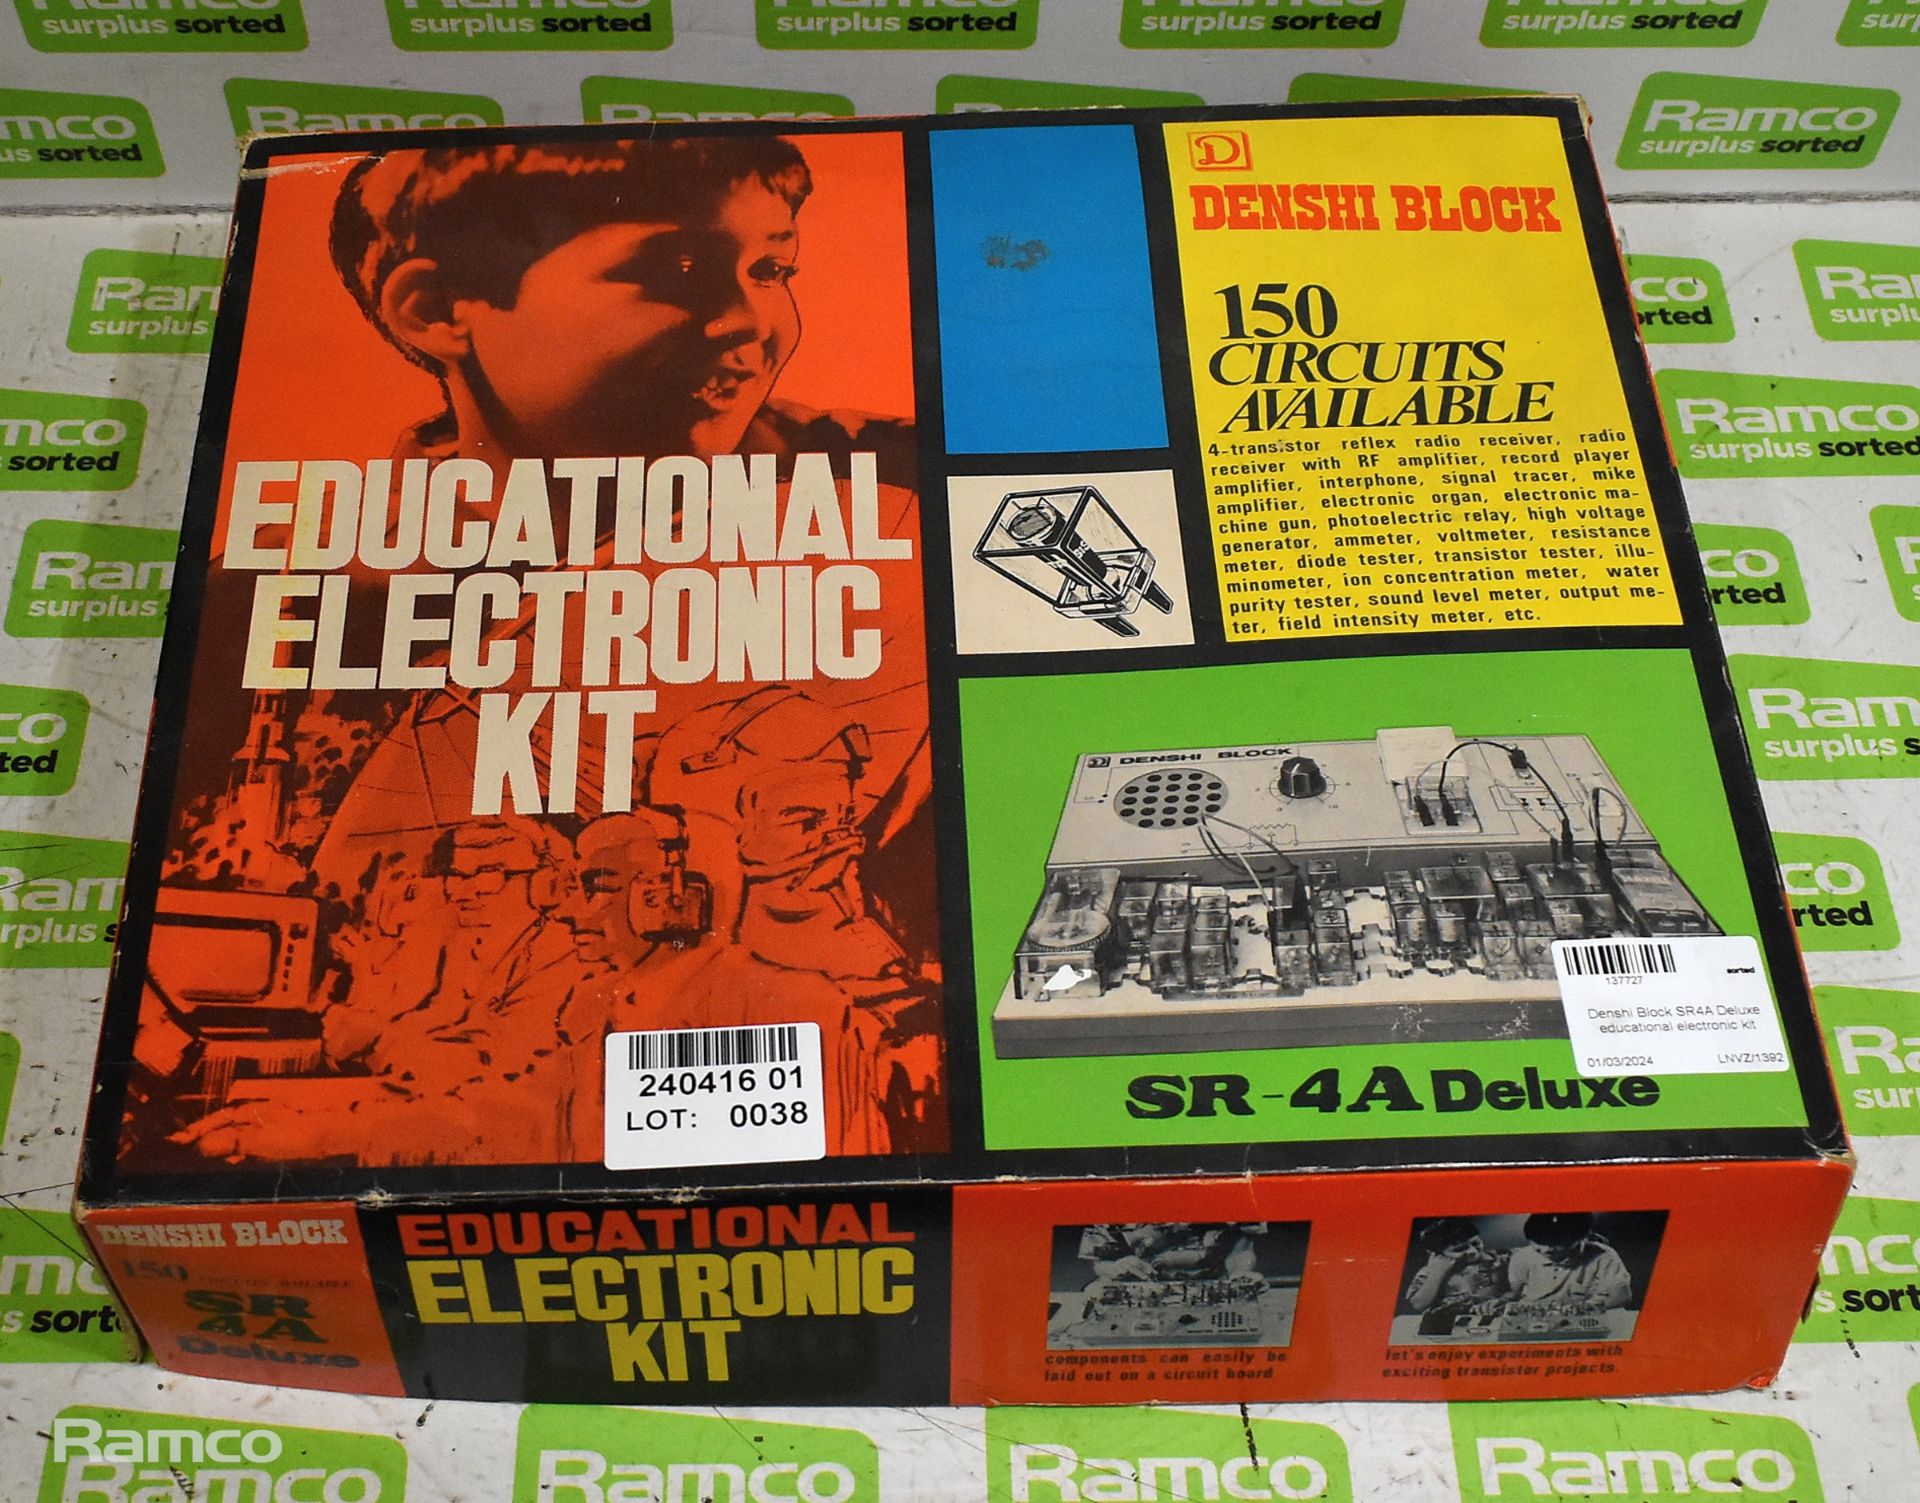 Denshi Block SR4A Deluxe educational electronic kit